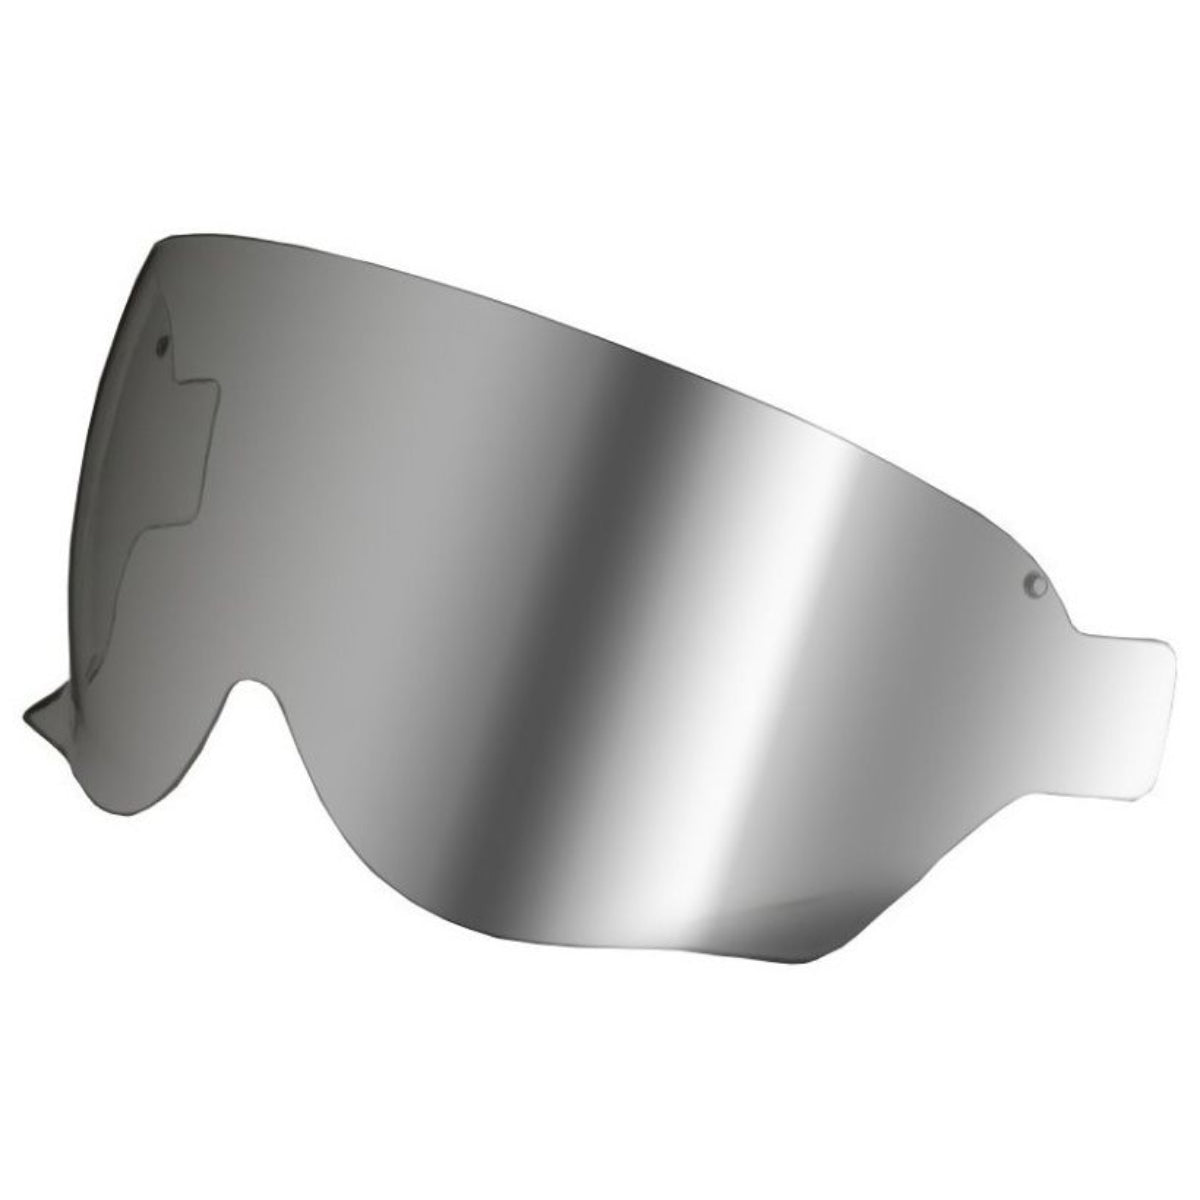 Genuine Shoei Helmets replacement visor for Shoei Models J.O. Ex Zero